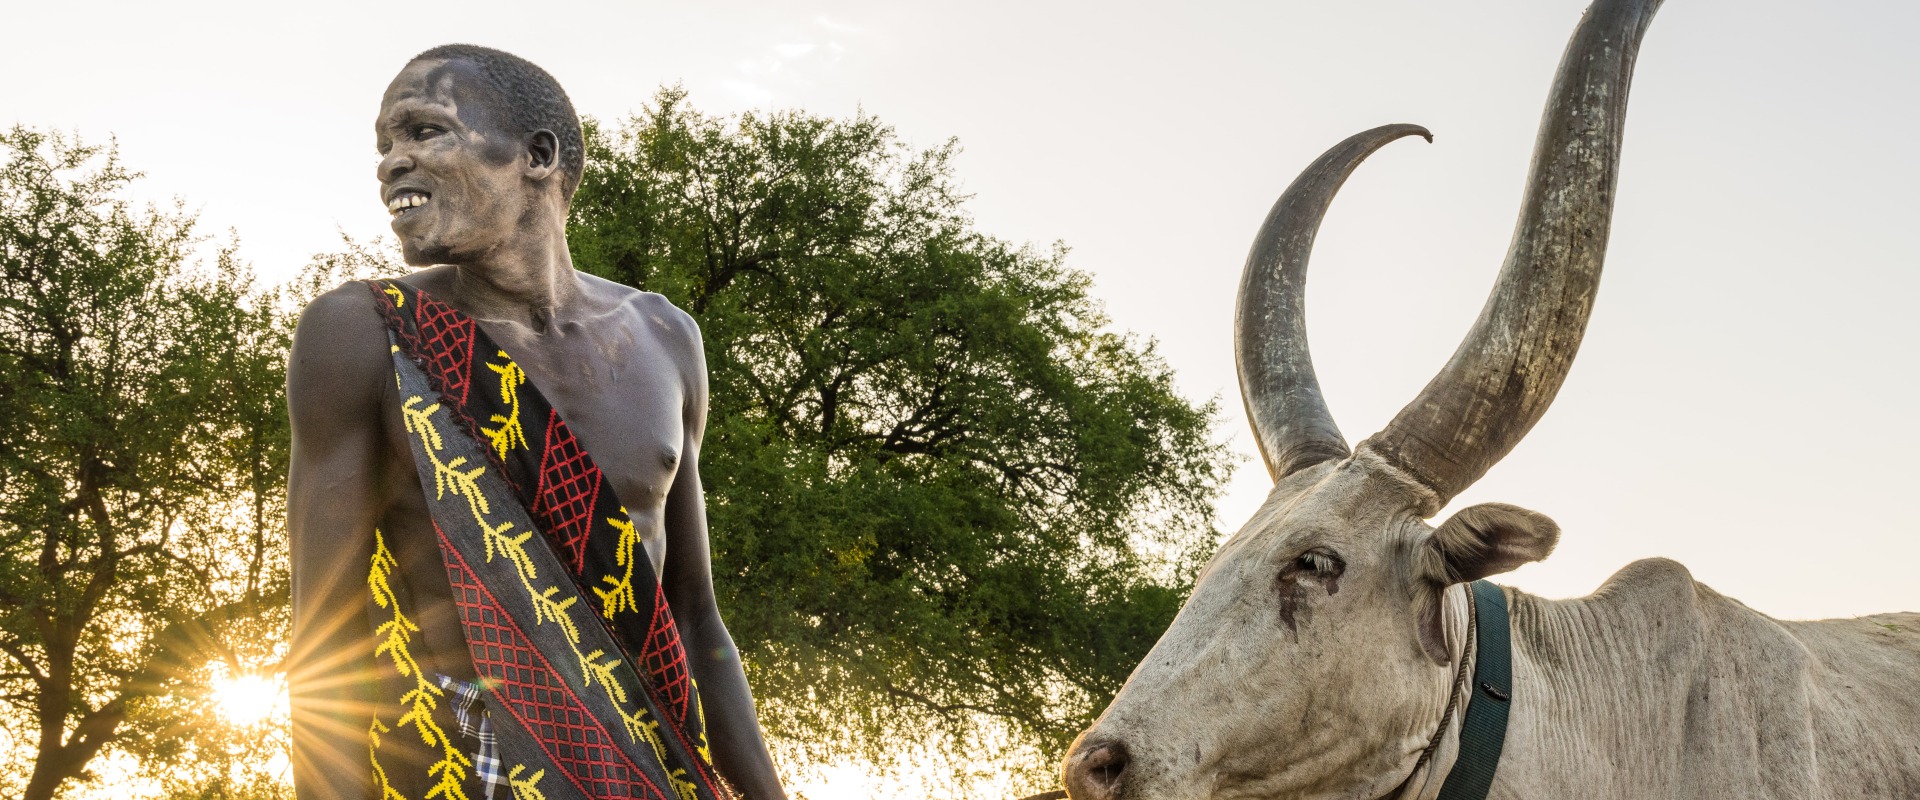 Tribesman from Community Bala Mundari, courtesy African Parks/Marcus Westberg